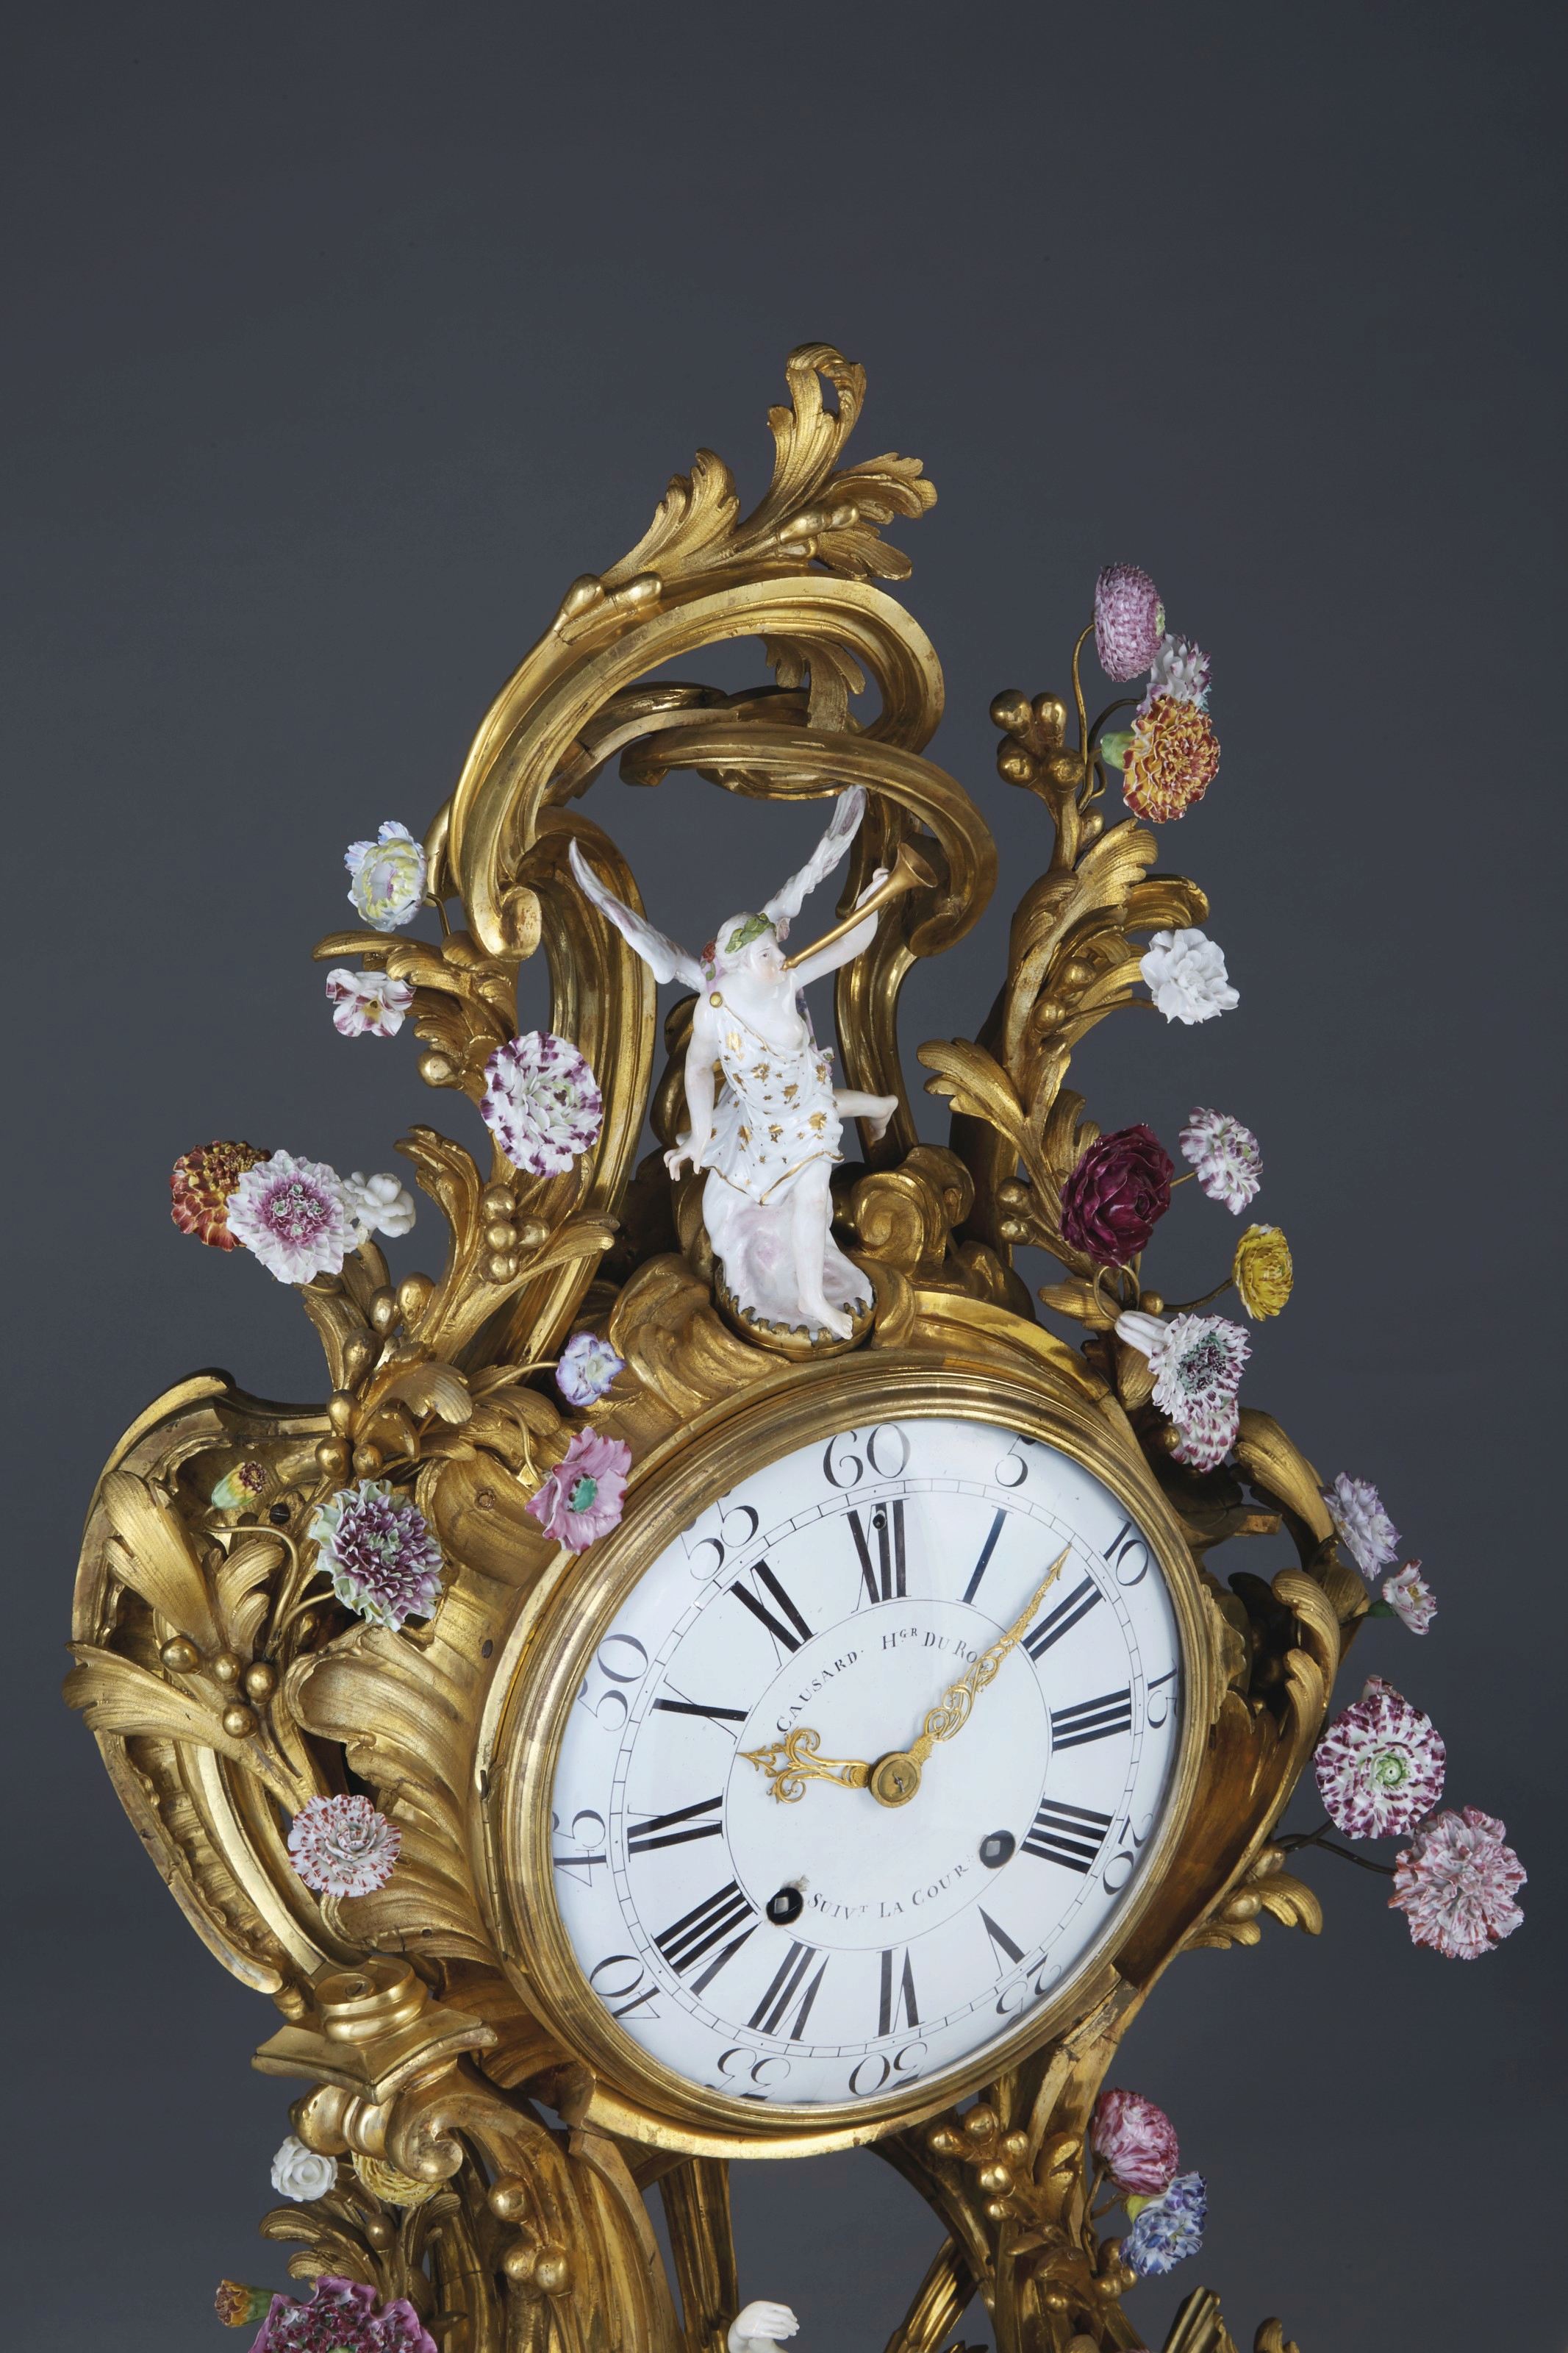 Horloges et pendules du XVIIIe siècle - Page 2 2020_n44